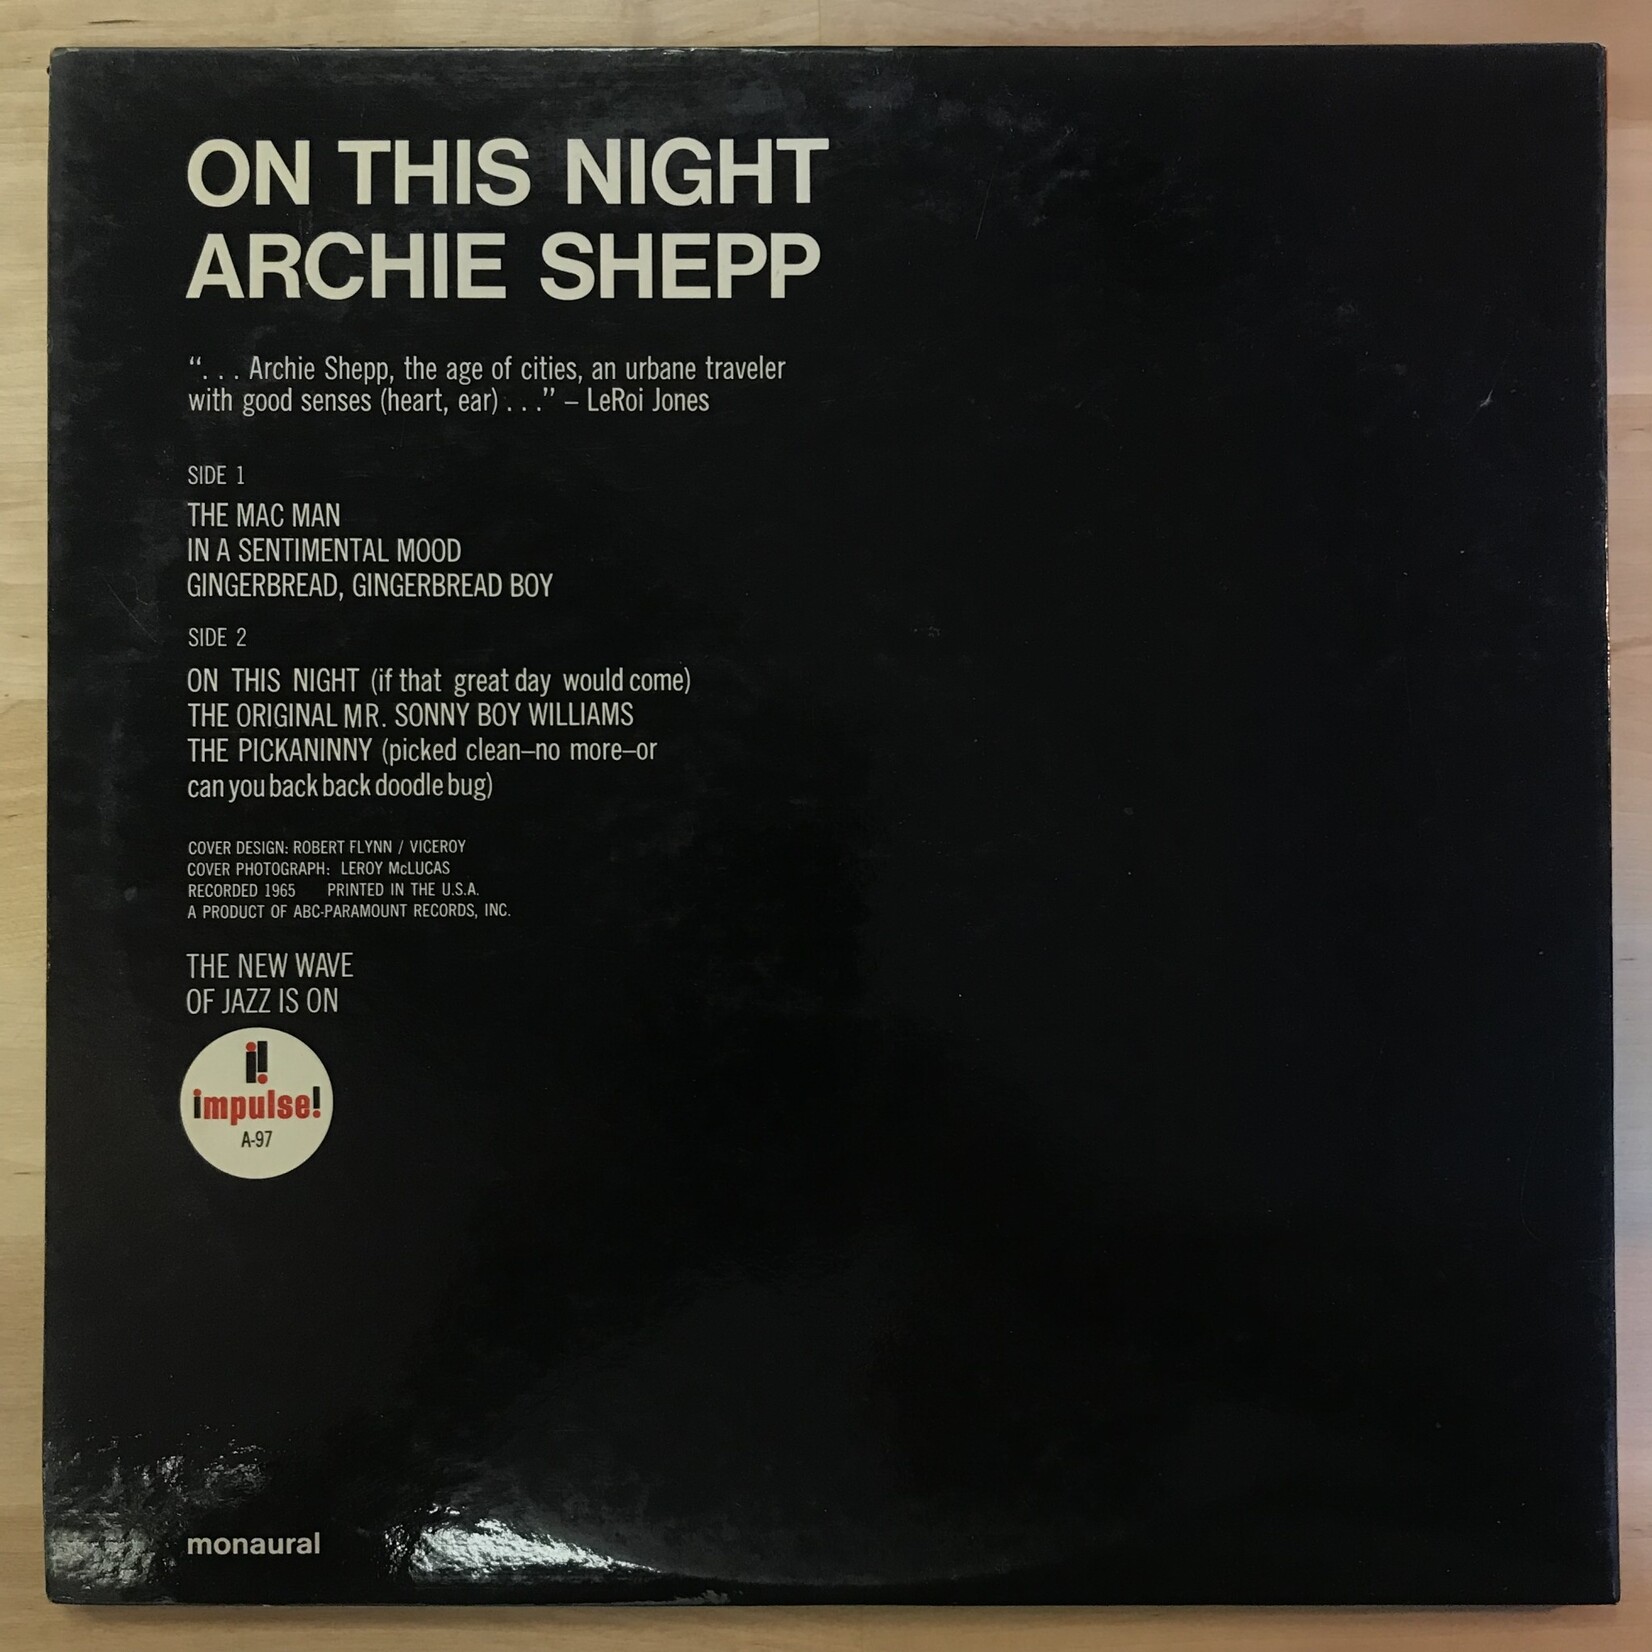 Archie Shepp - On This Night - Impulse - A97 - Vinyl LP (USED)